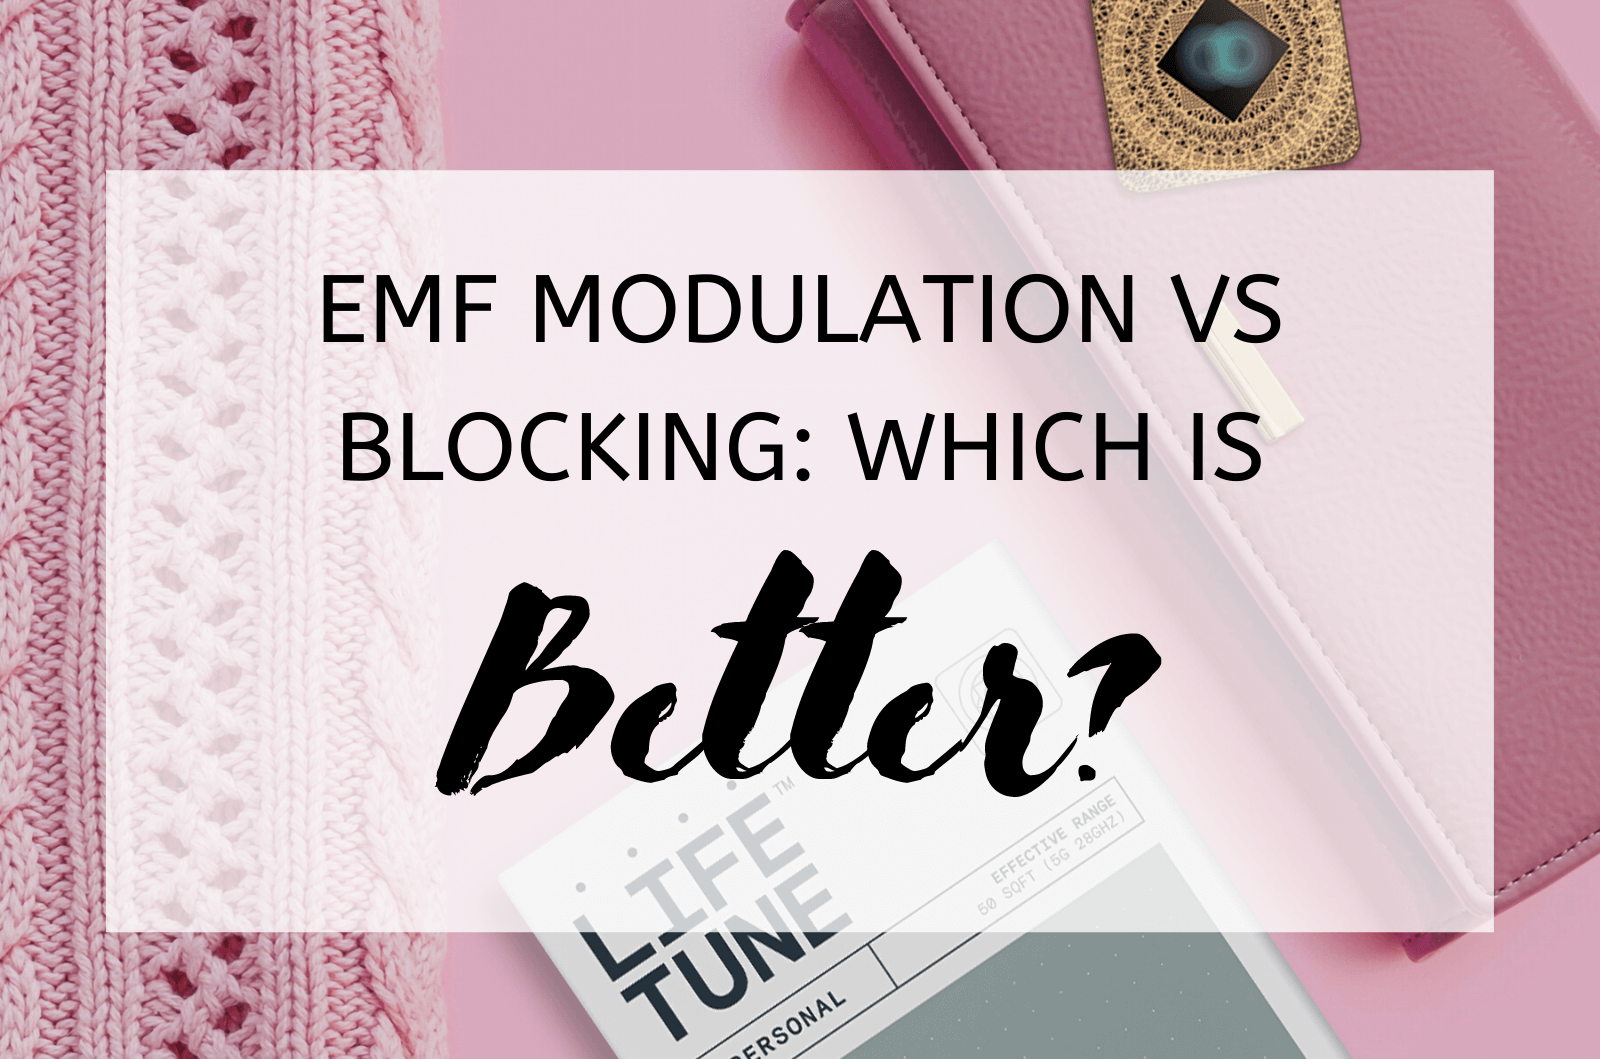 Emf Modulation Vs Blocking: Which Is Better?